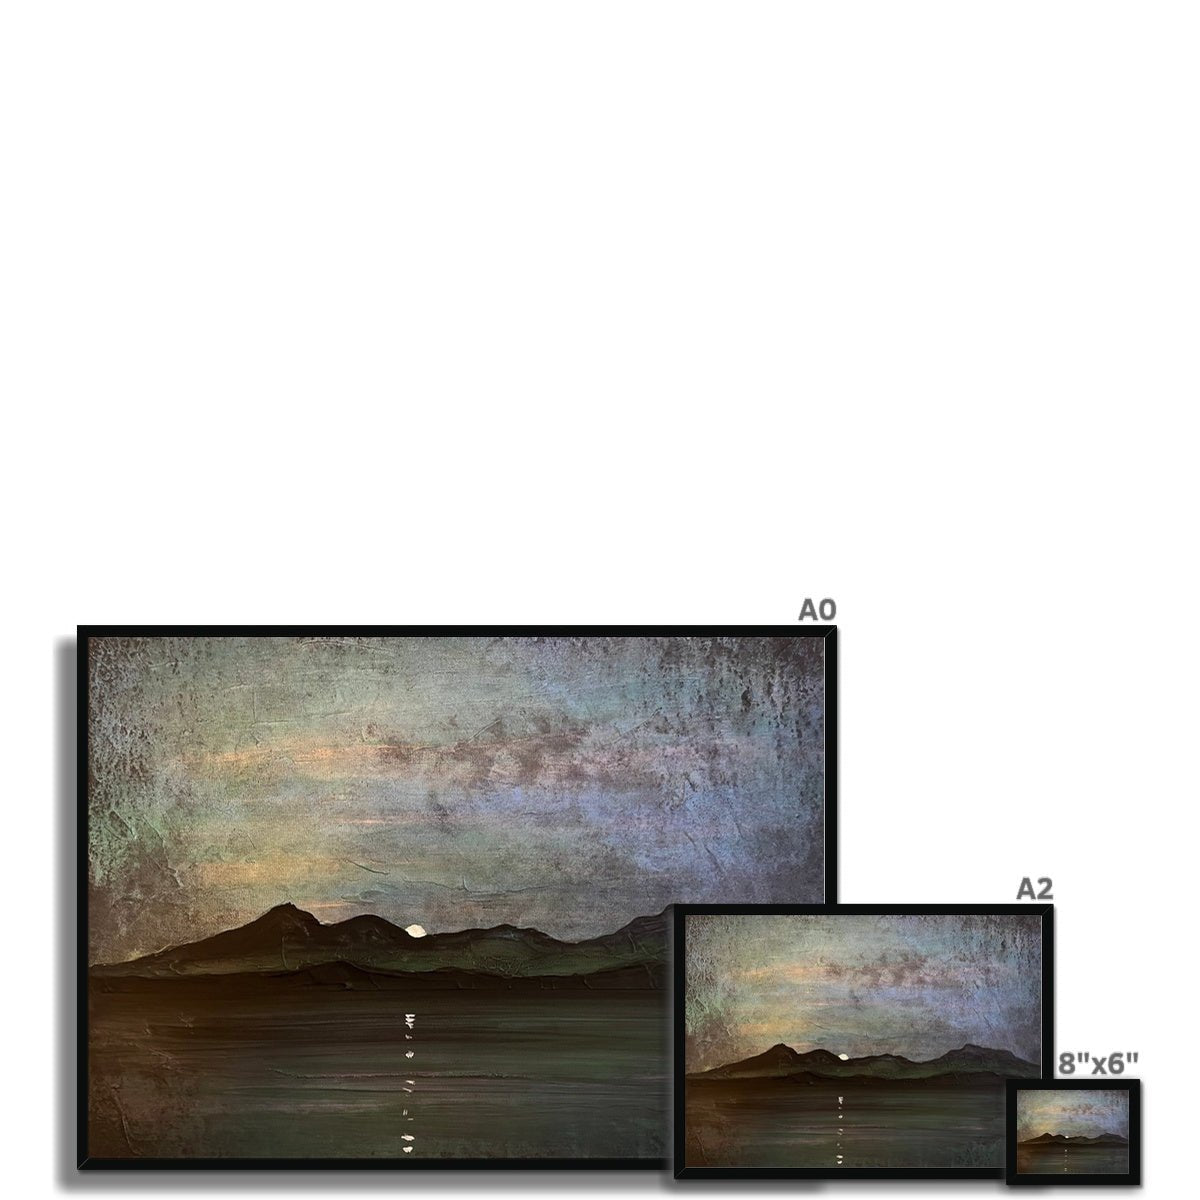 Sleeping Warrior Moonlight Arran Painting | Framed Prints From Scotland-Framed Prints-Arran Art Gallery-Paintings, Prints, Homeware, Art Gifts From Scotland By Scottish Artist Kevin Hunter